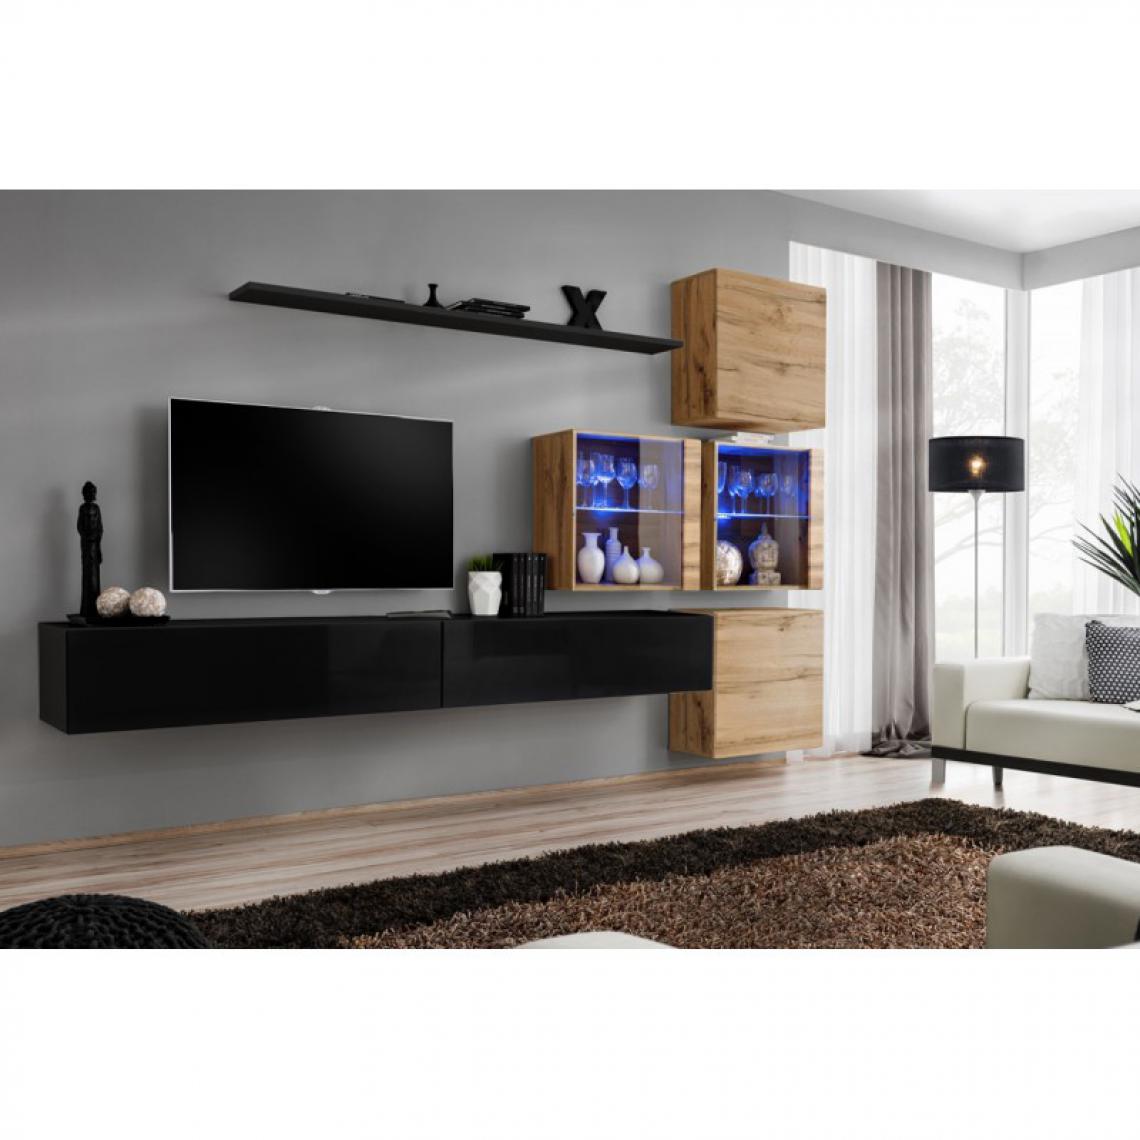 Ac-Deco - Meuble TV Mural Design Switch XIX 310cm Noir & Naturel - Meubles TV, Hi-Fi